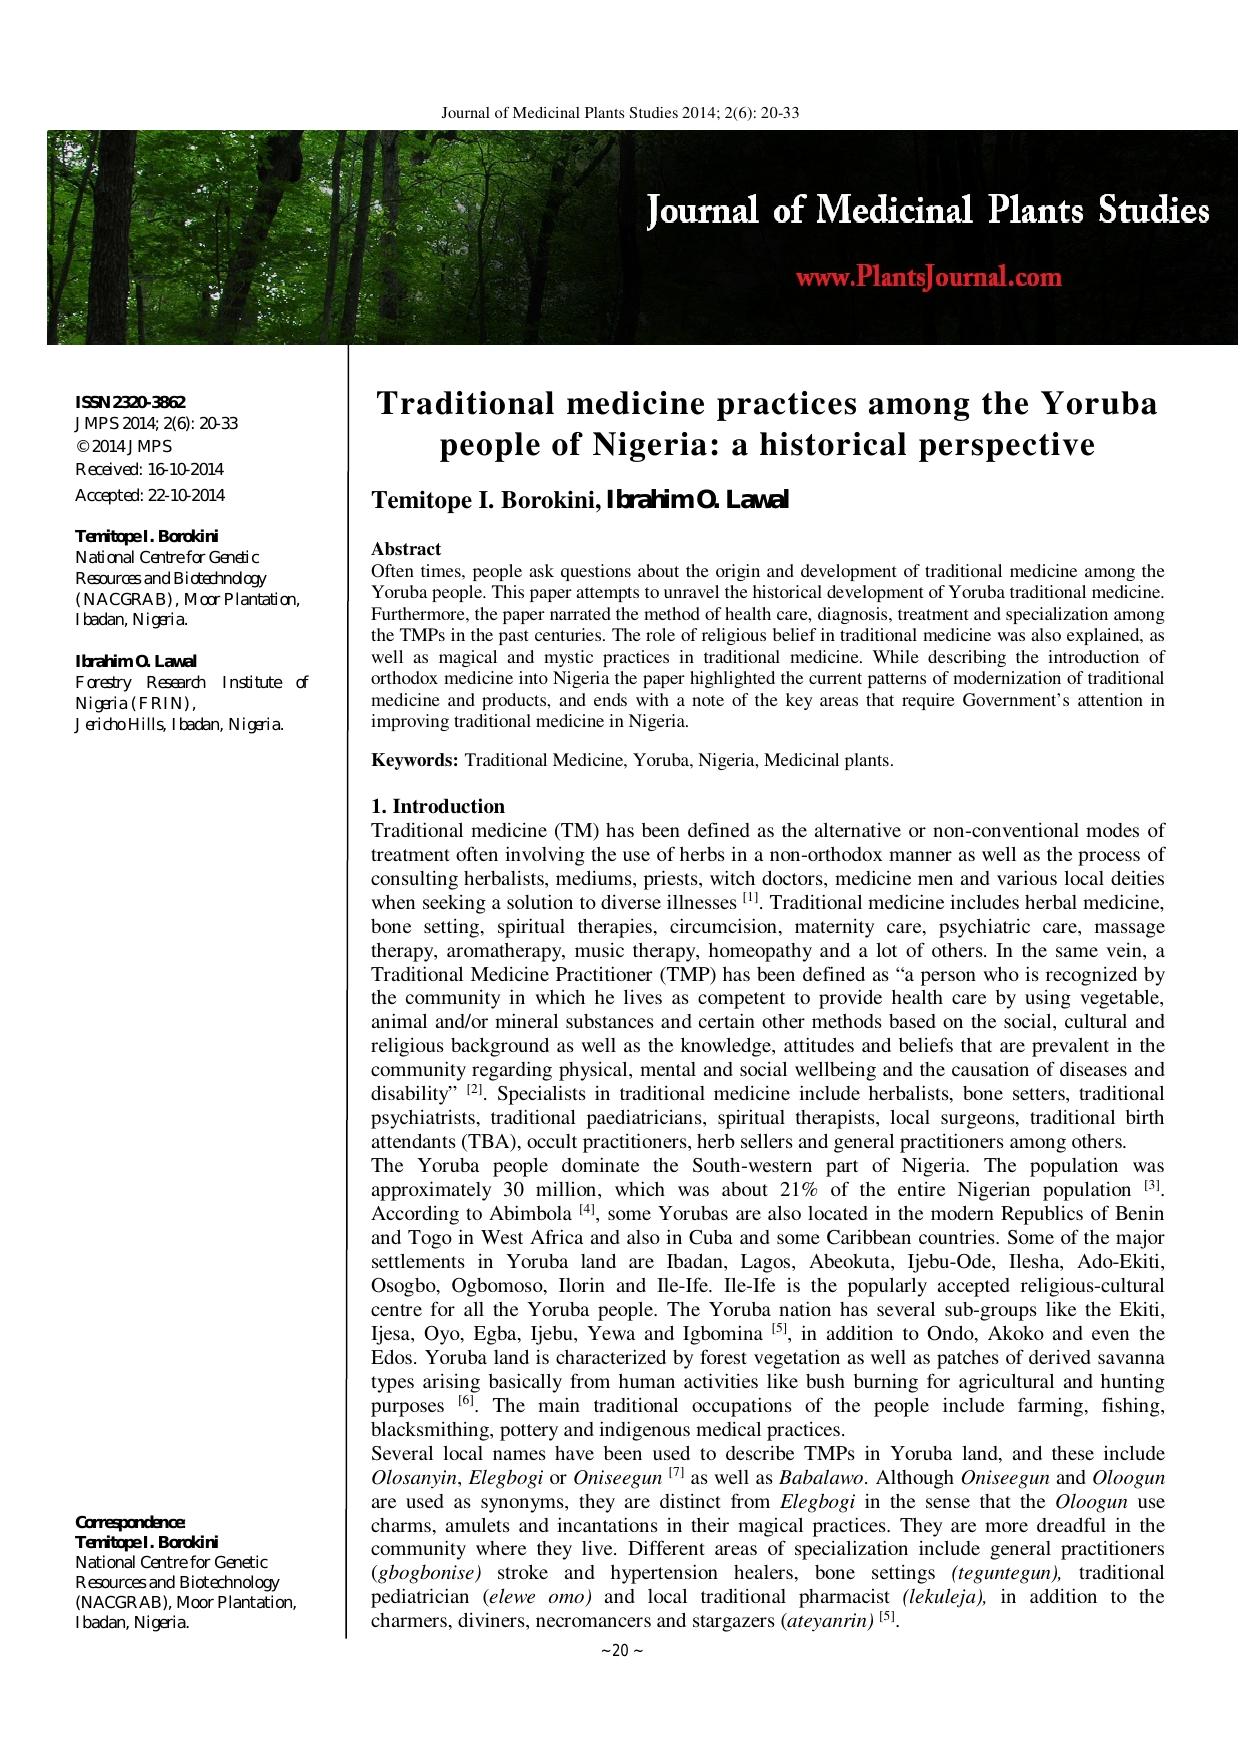 Traditional medicine practices among the Yoruba